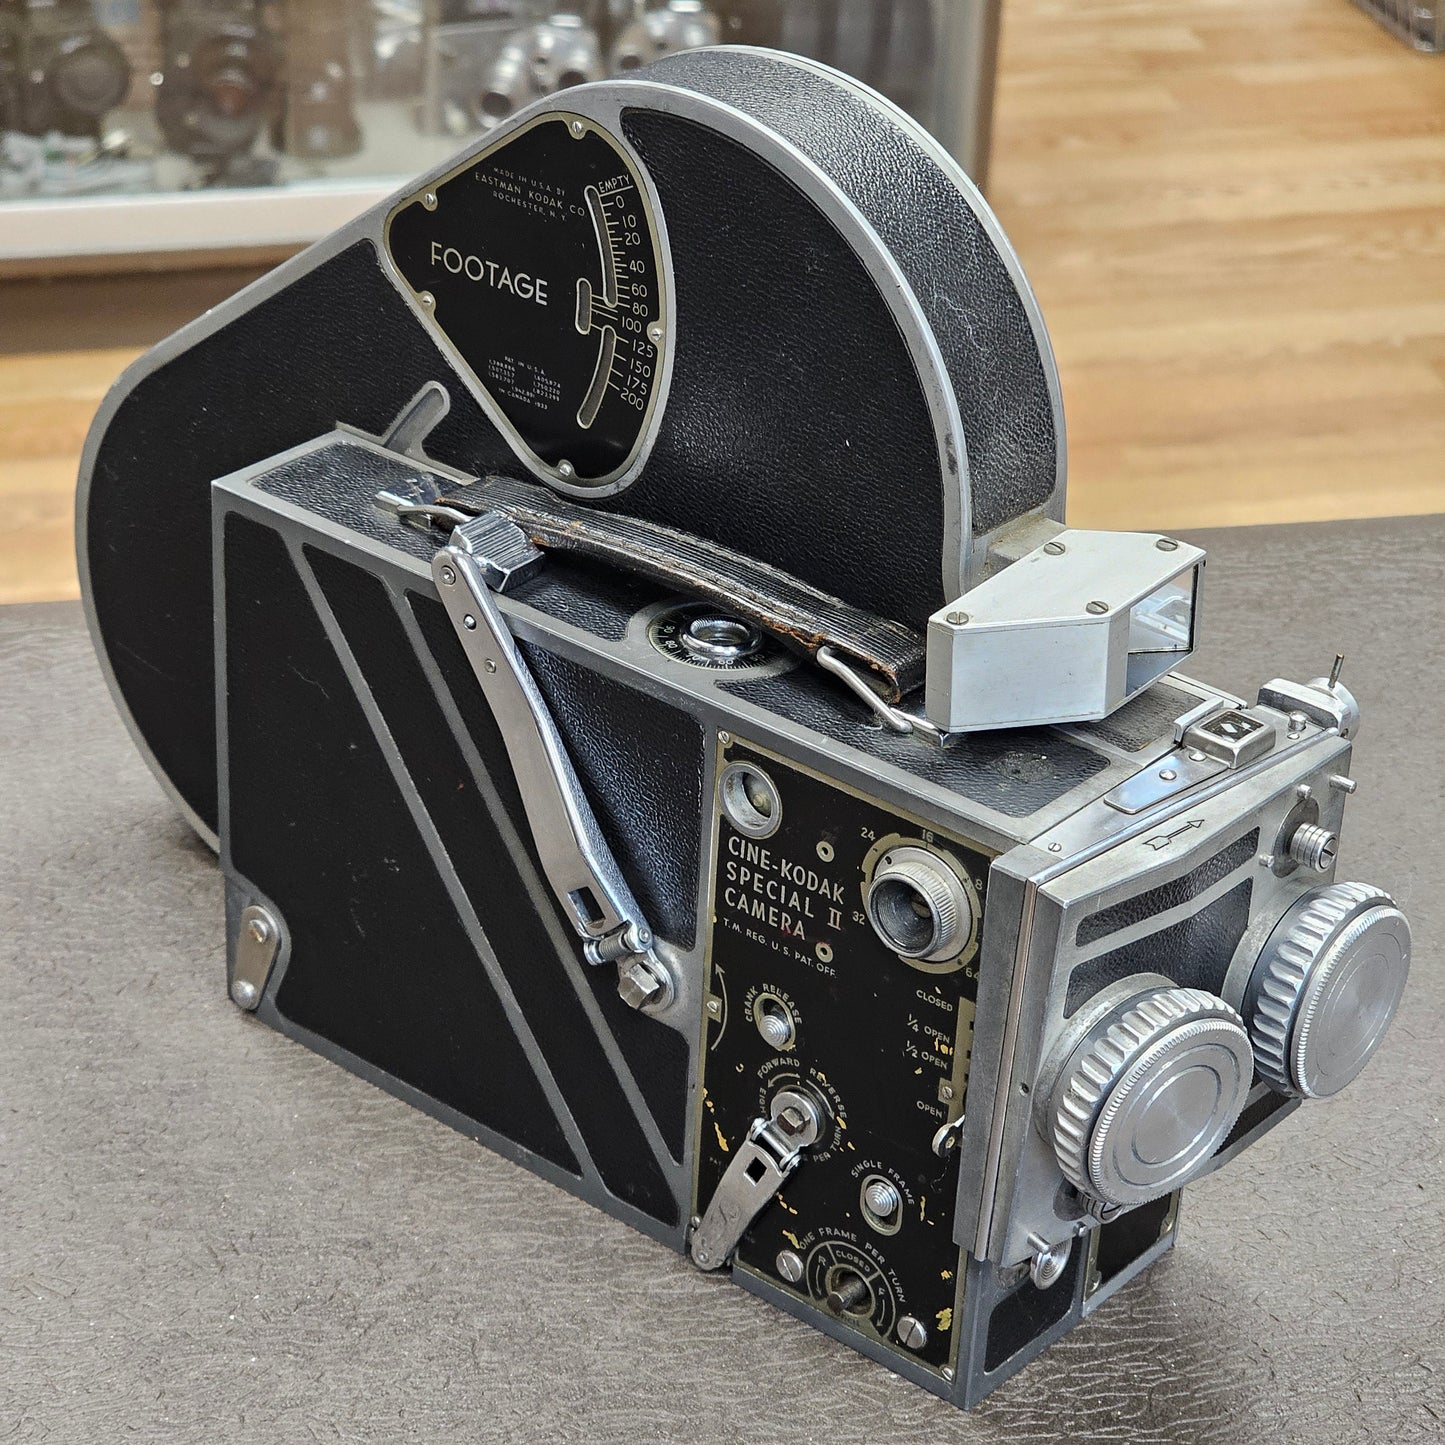 Cine-Kodak SpeciaI 200' 16mm Magazine